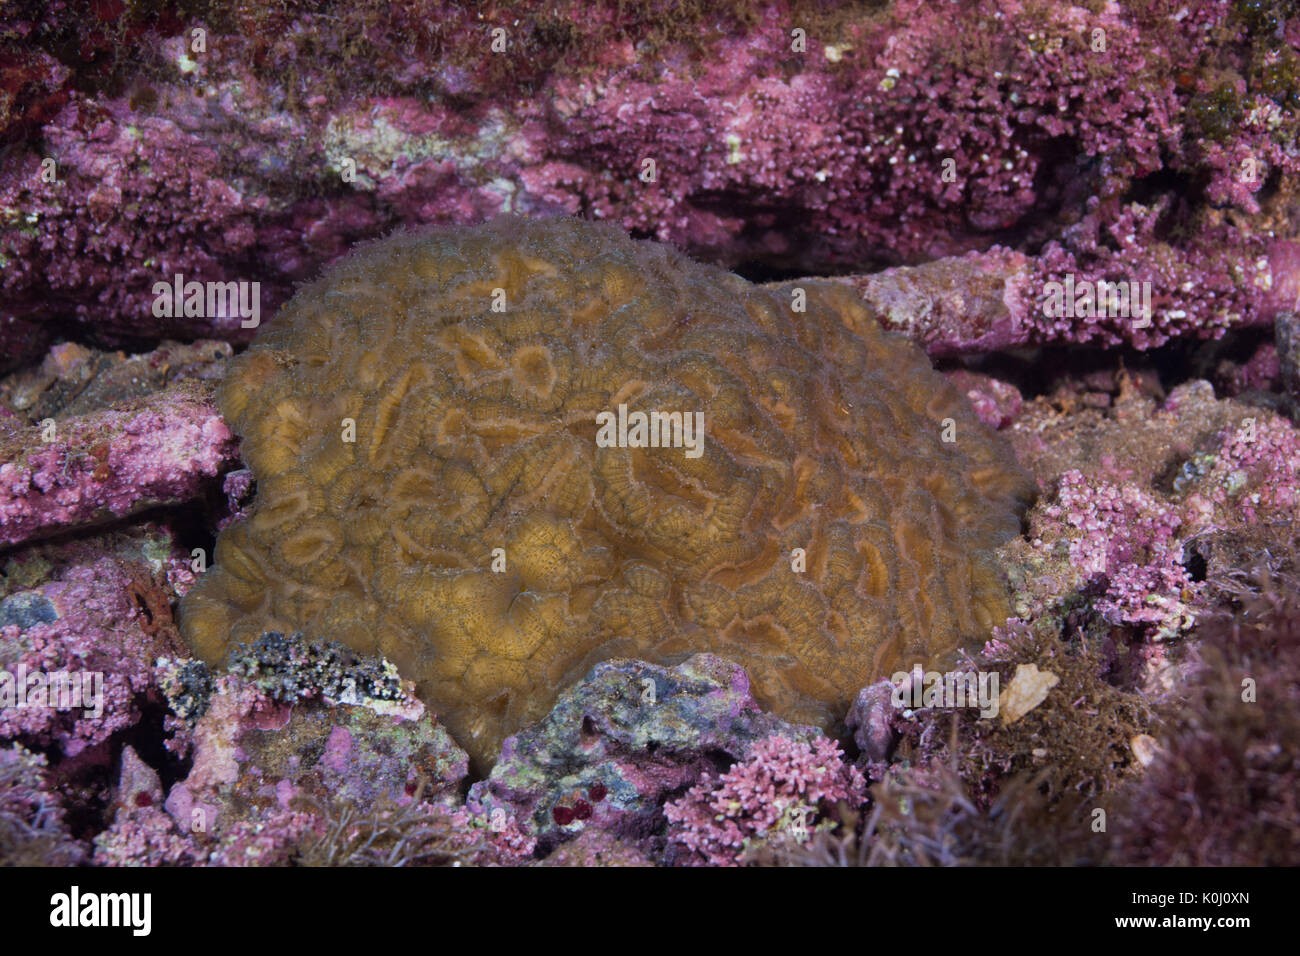 Género coral submarino mussismilia Ilha da Queimada Grande, en el sudeste de Brasil Foto de stock